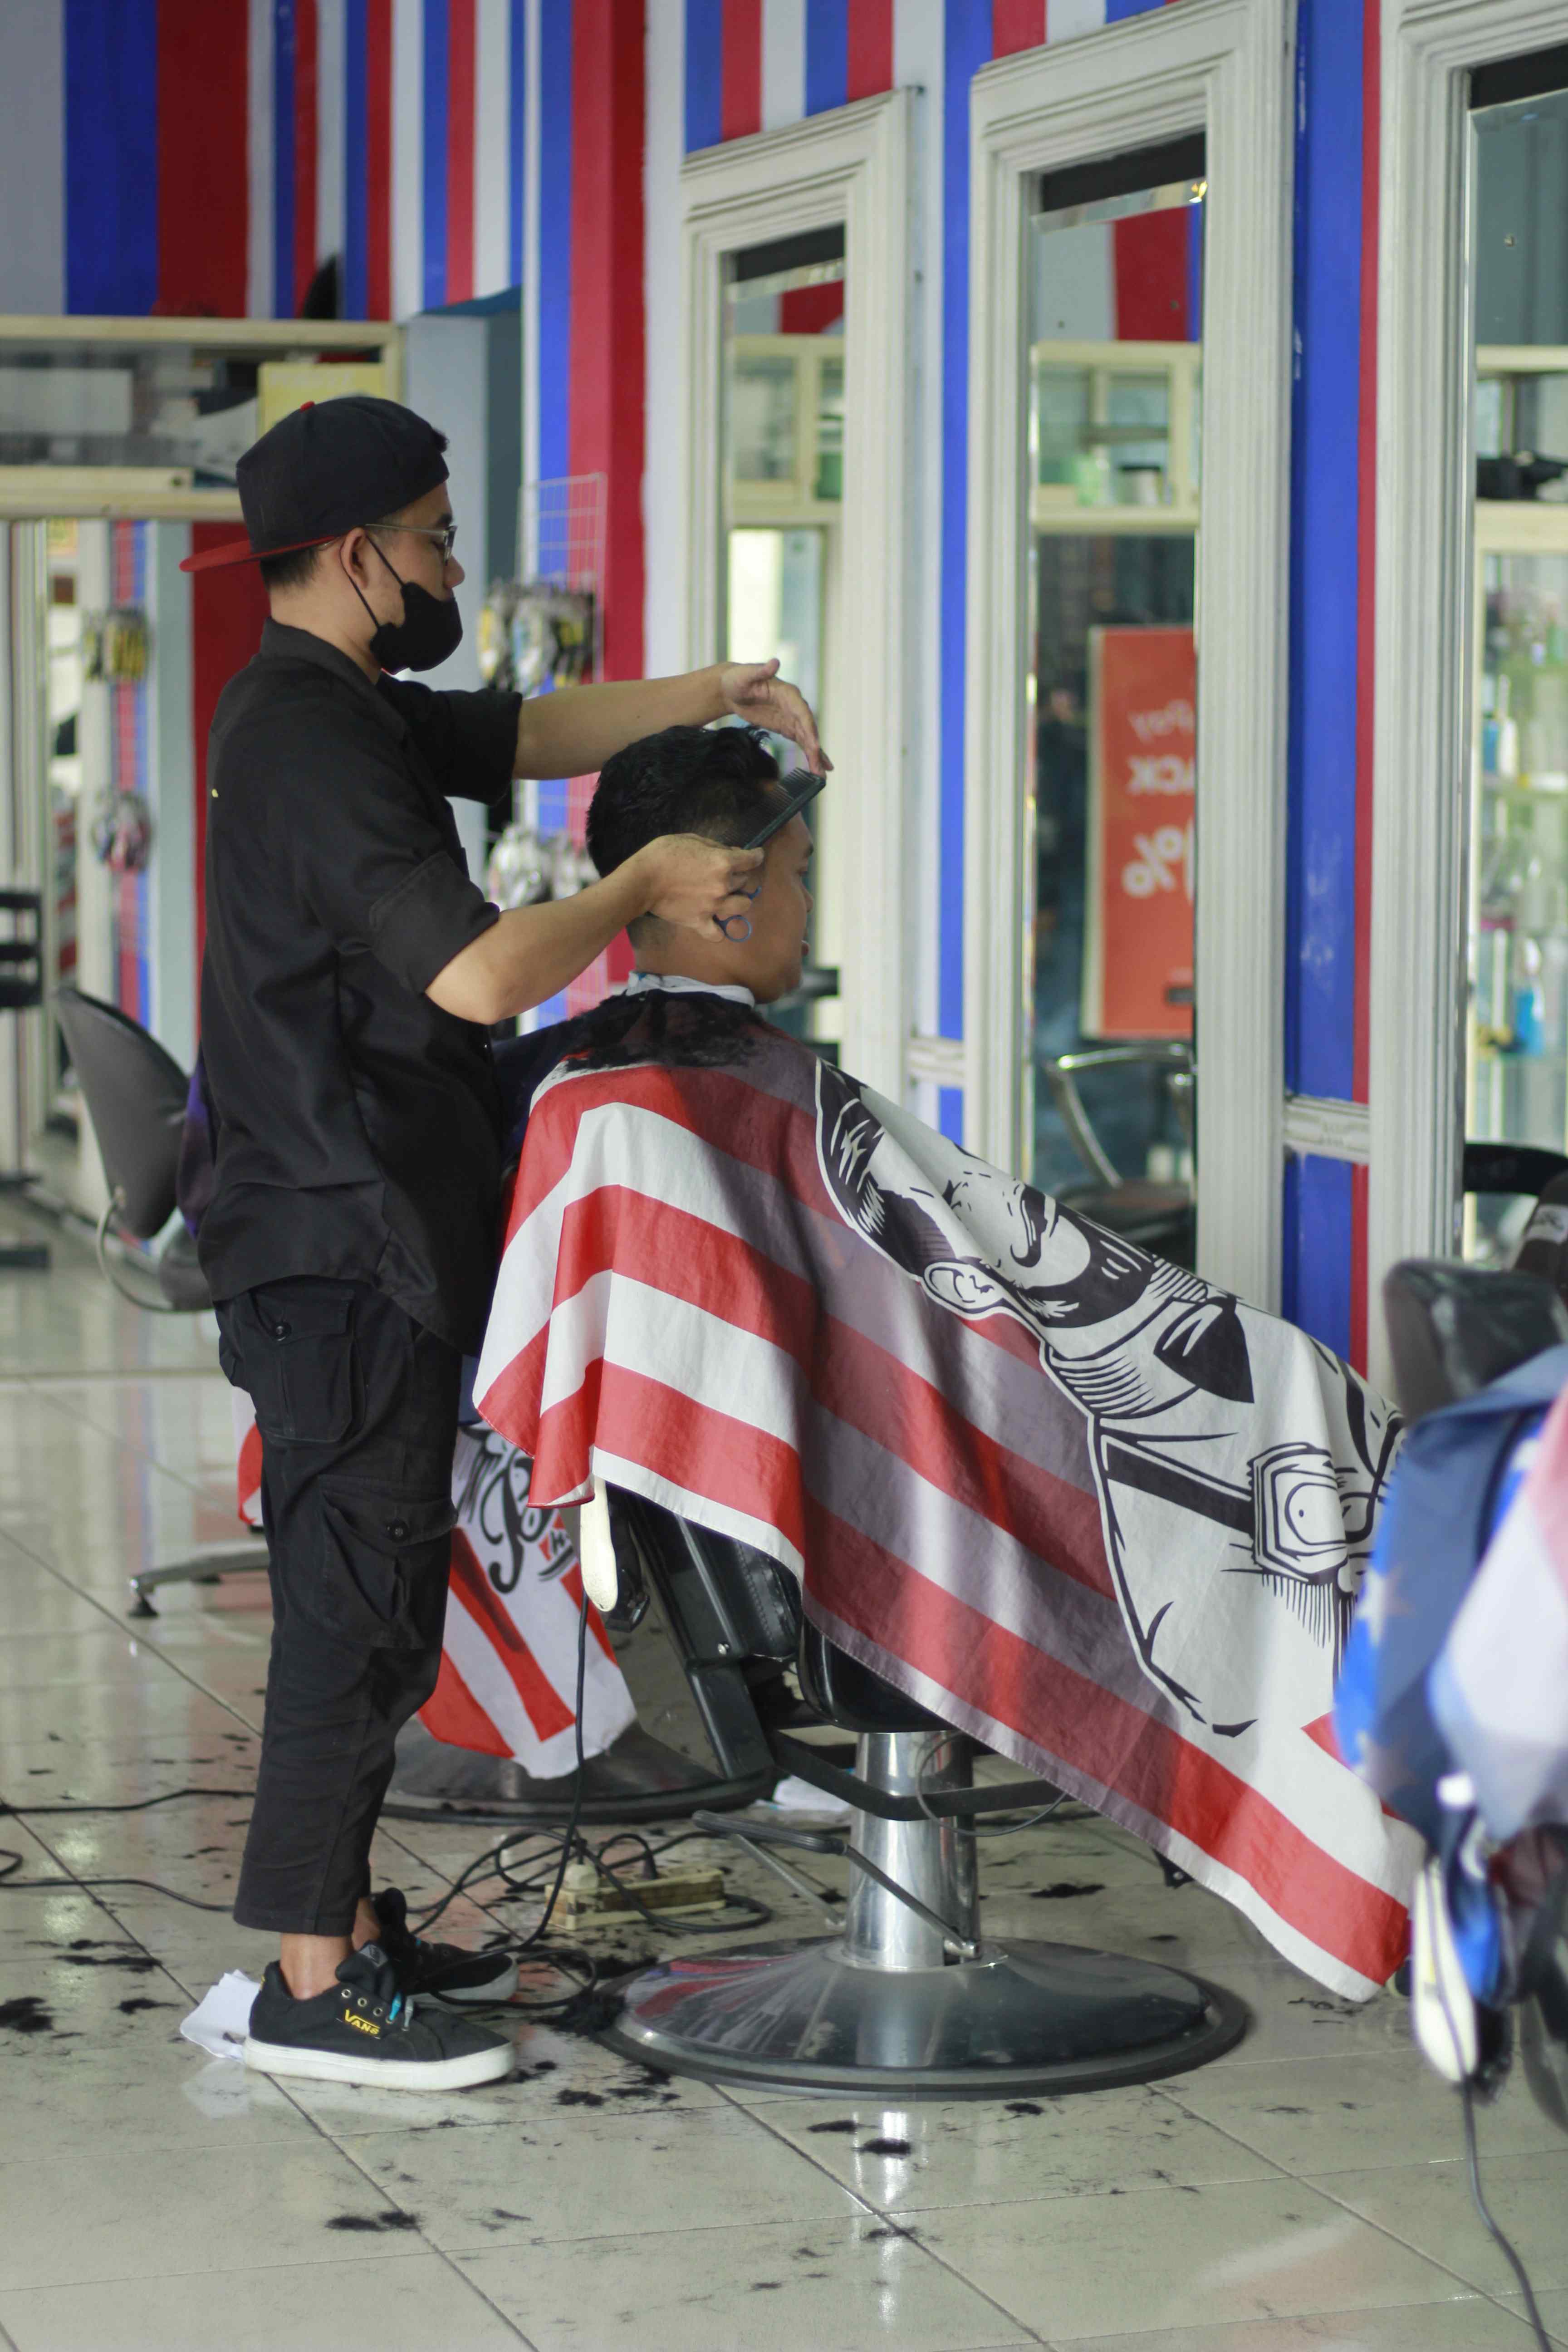 Rekomendasi Tempat Barbershop Di Kecamatan Kedungkandang Profesional